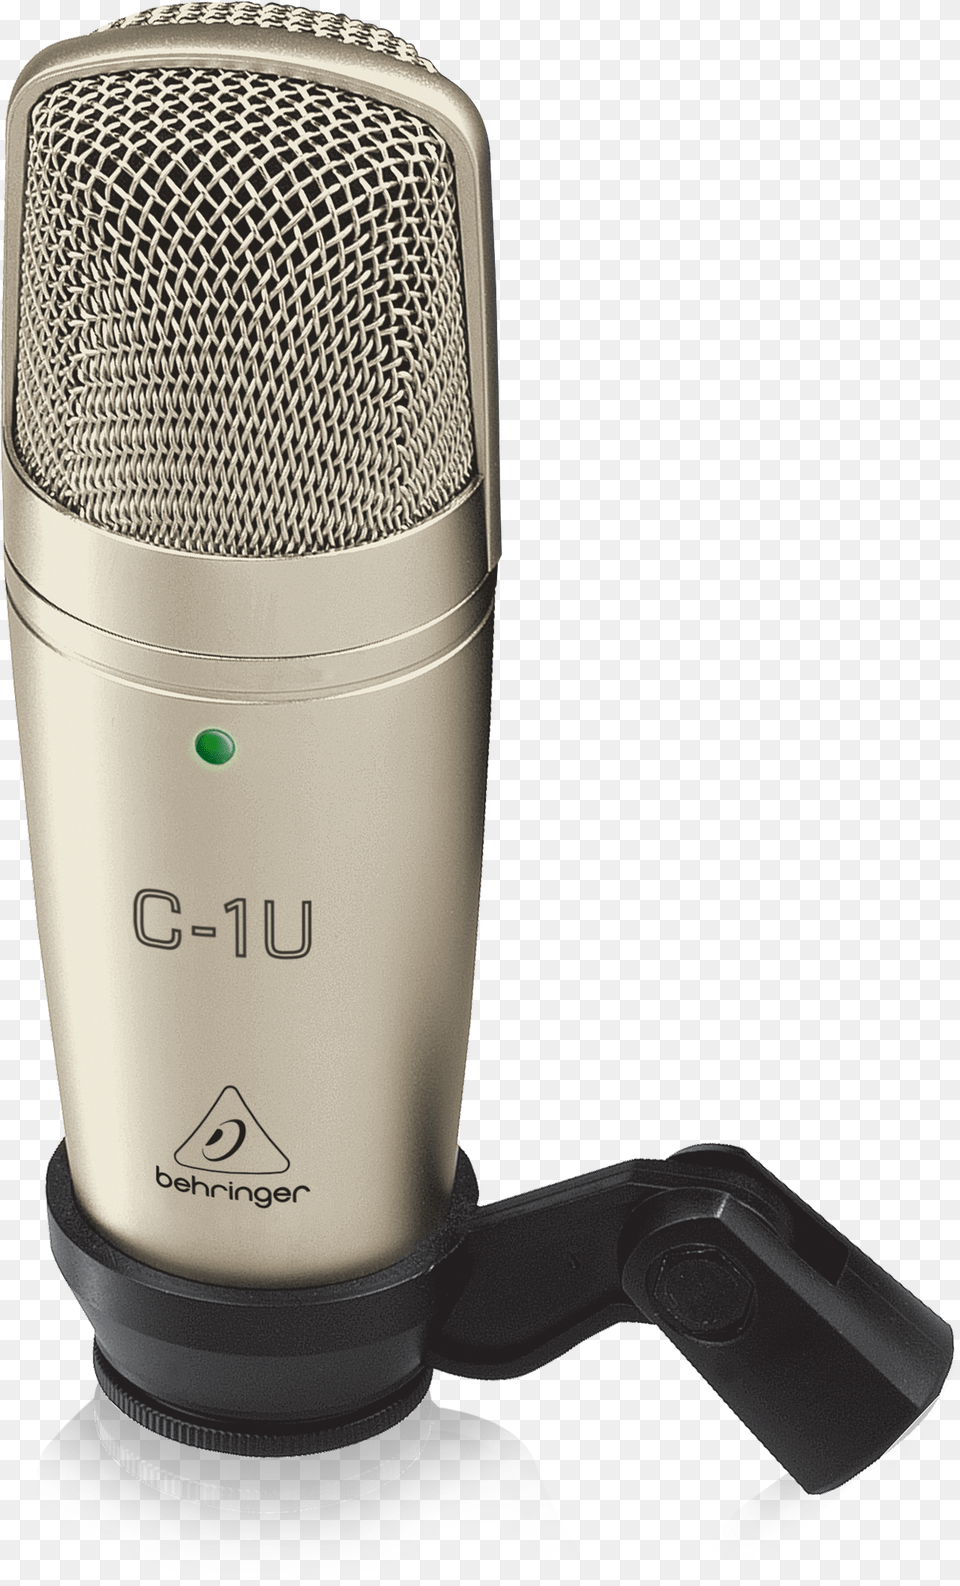 Behringer Product C 1u Behringer C1 U, Electrical Device, Microphone Free Png